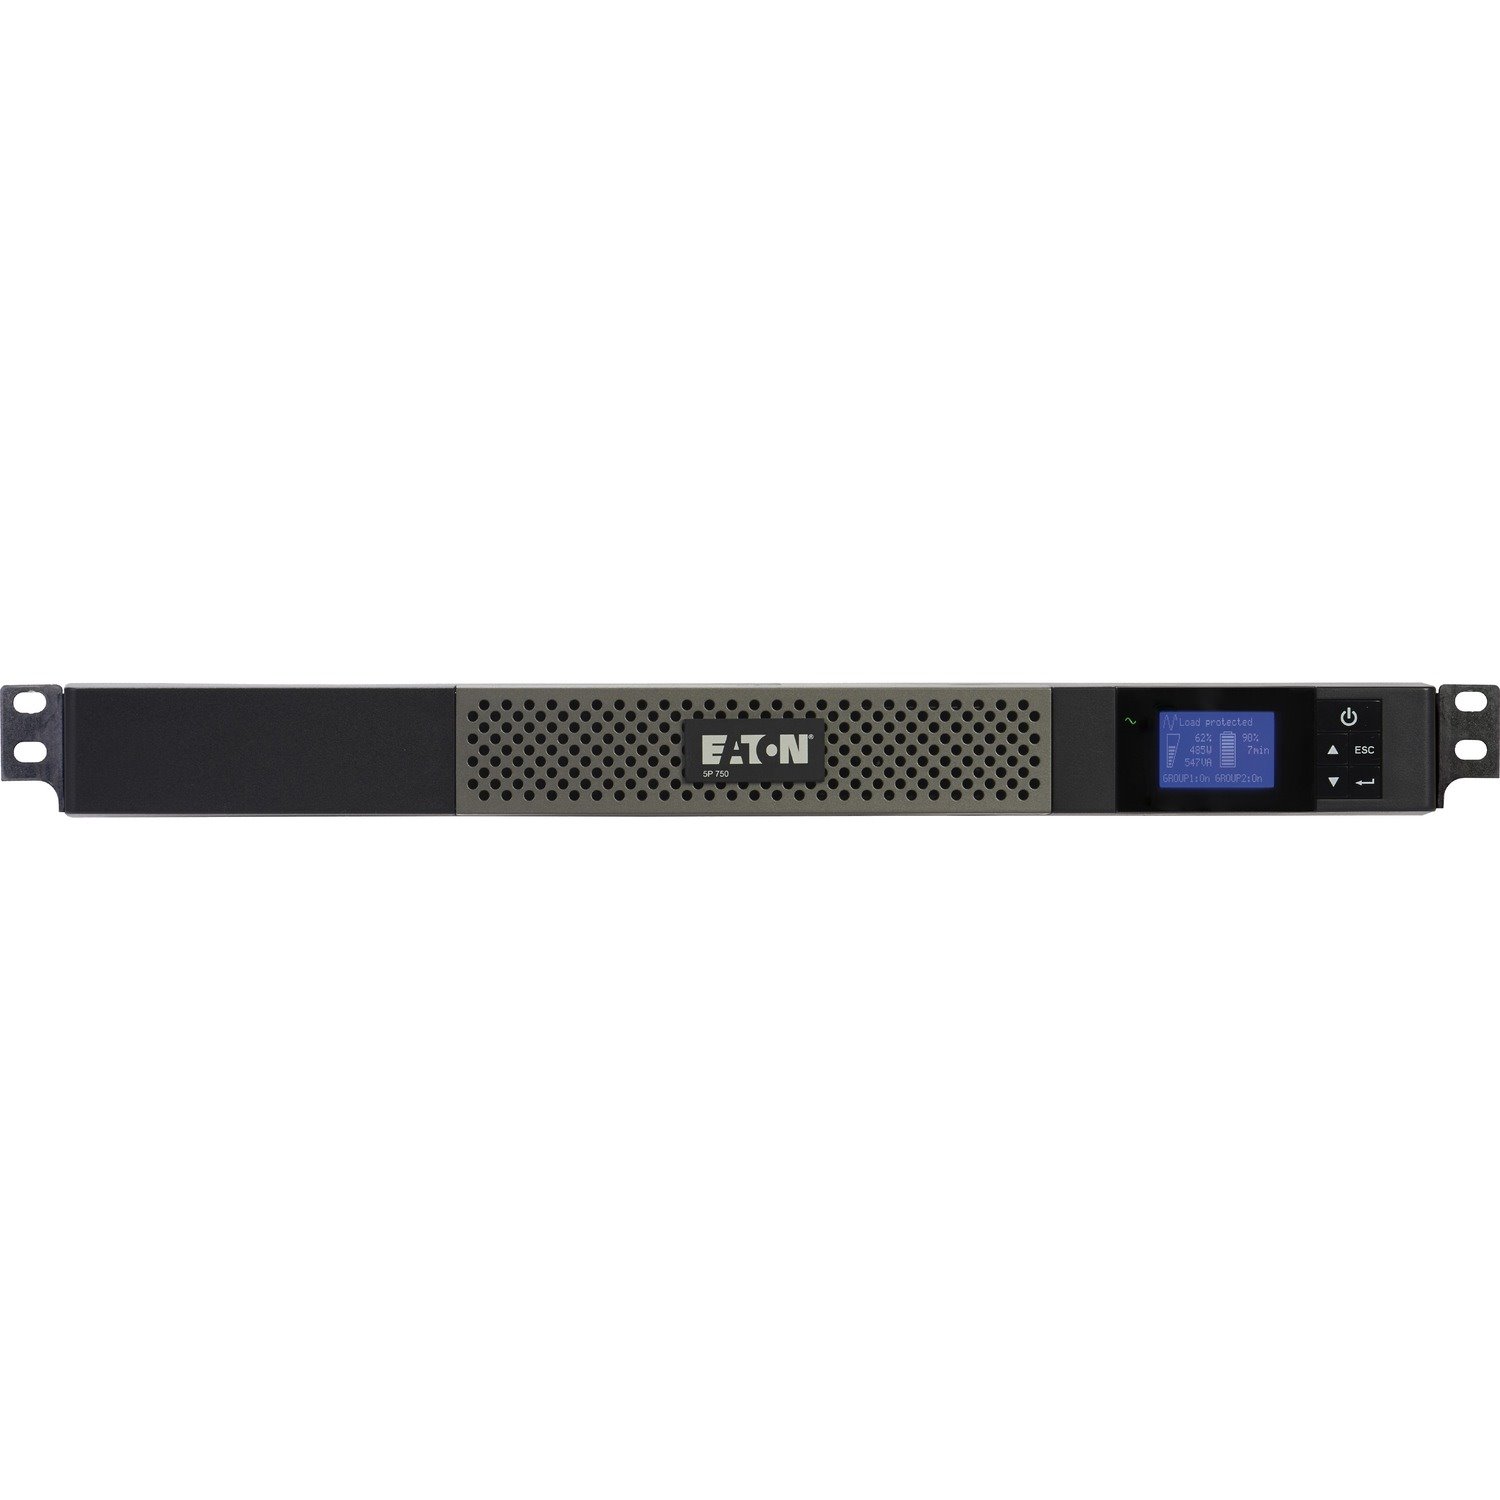 Eaton 5P 750VA 600W 120V Line-Interactive UPS, 5-15P, 5x 5-15R Outlets, True Sine Wave, Cybersecure Network Card Option, 1U - Battery Backup